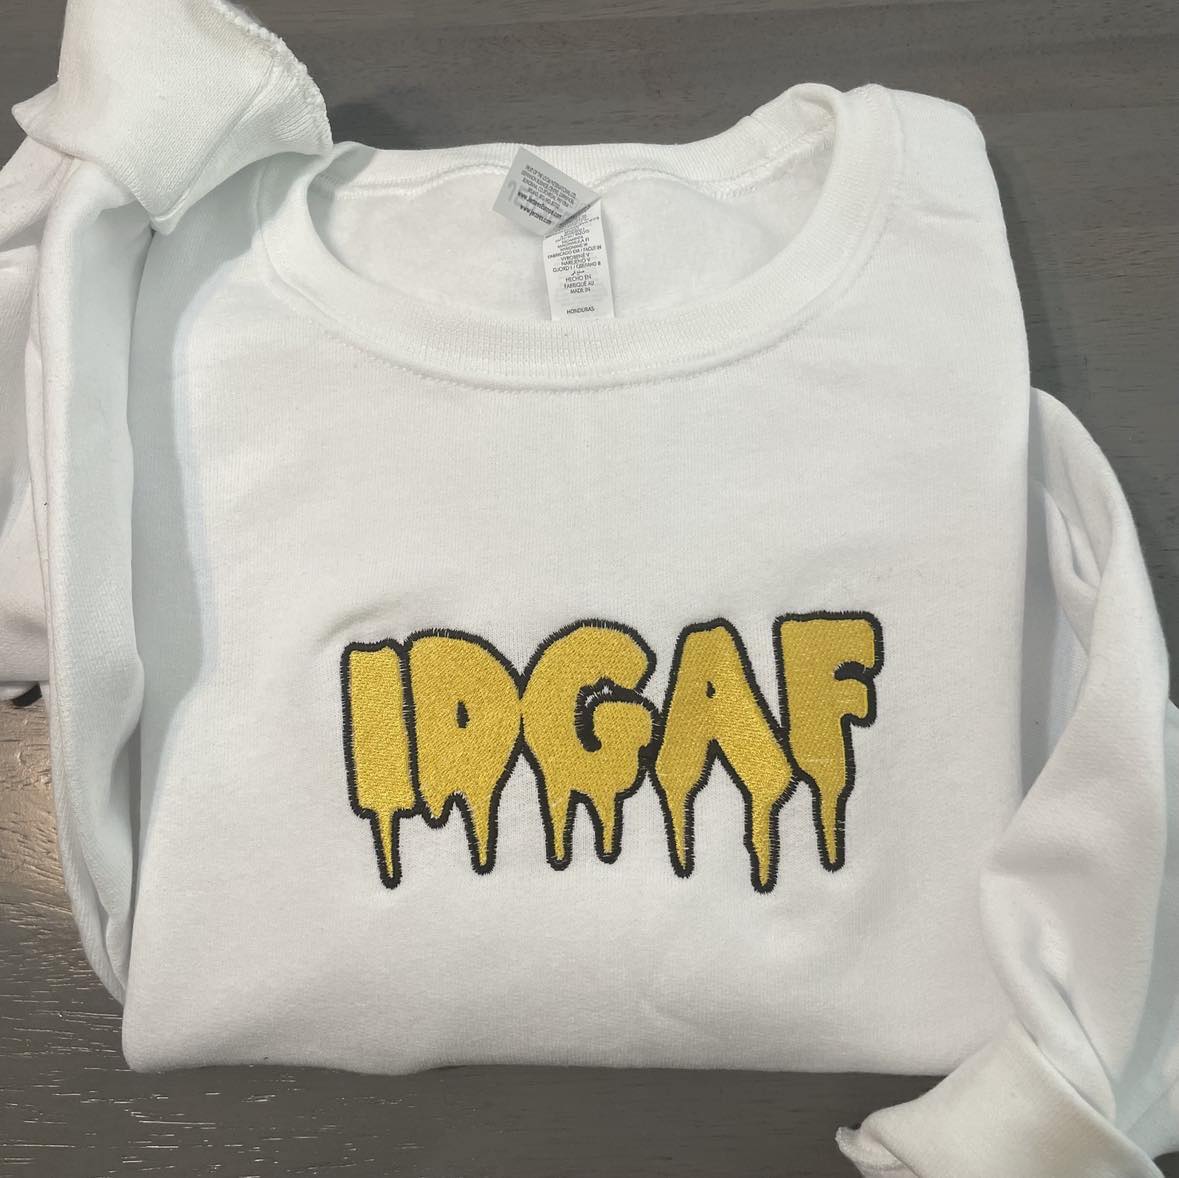 IDGAF embroidered sweatshirt; Funny embroidered crewneck